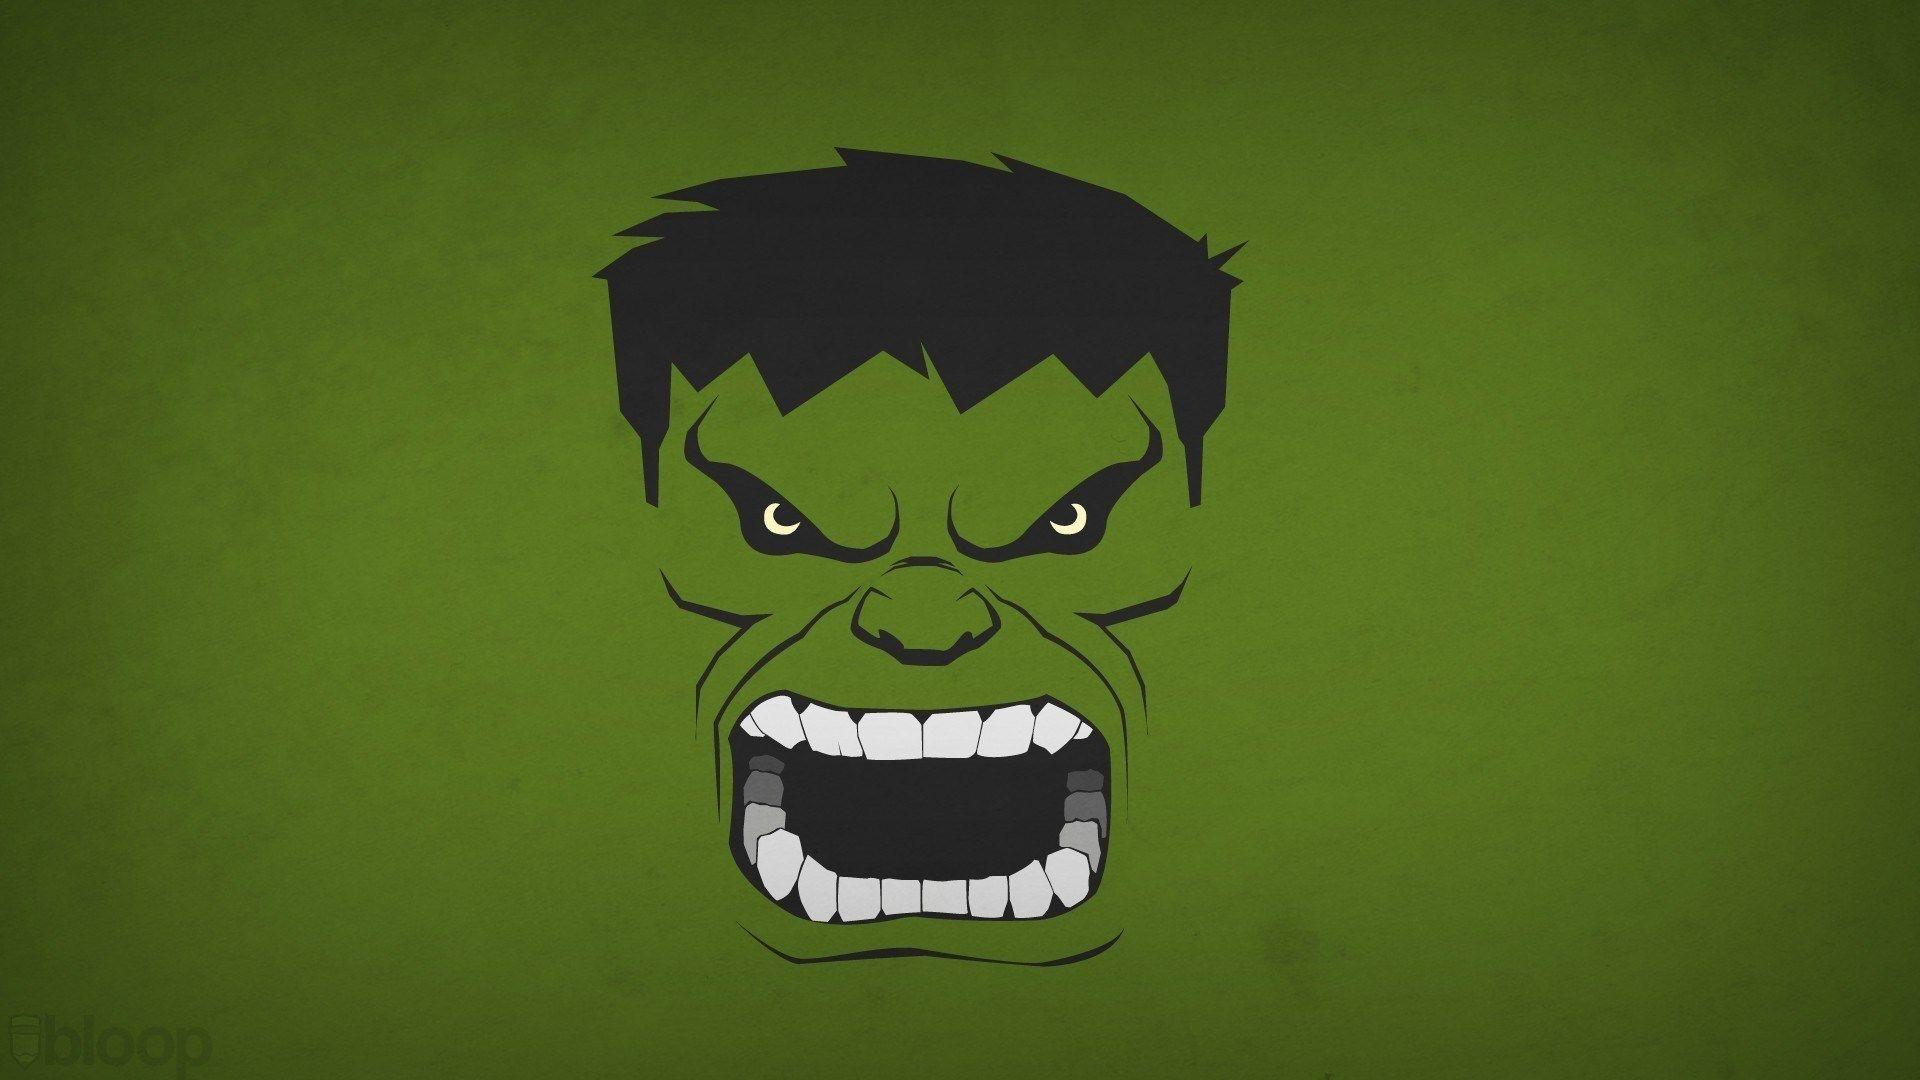 Hulk Cartoon 4K Wallpaper Free Hulk Cartoon 4K Background